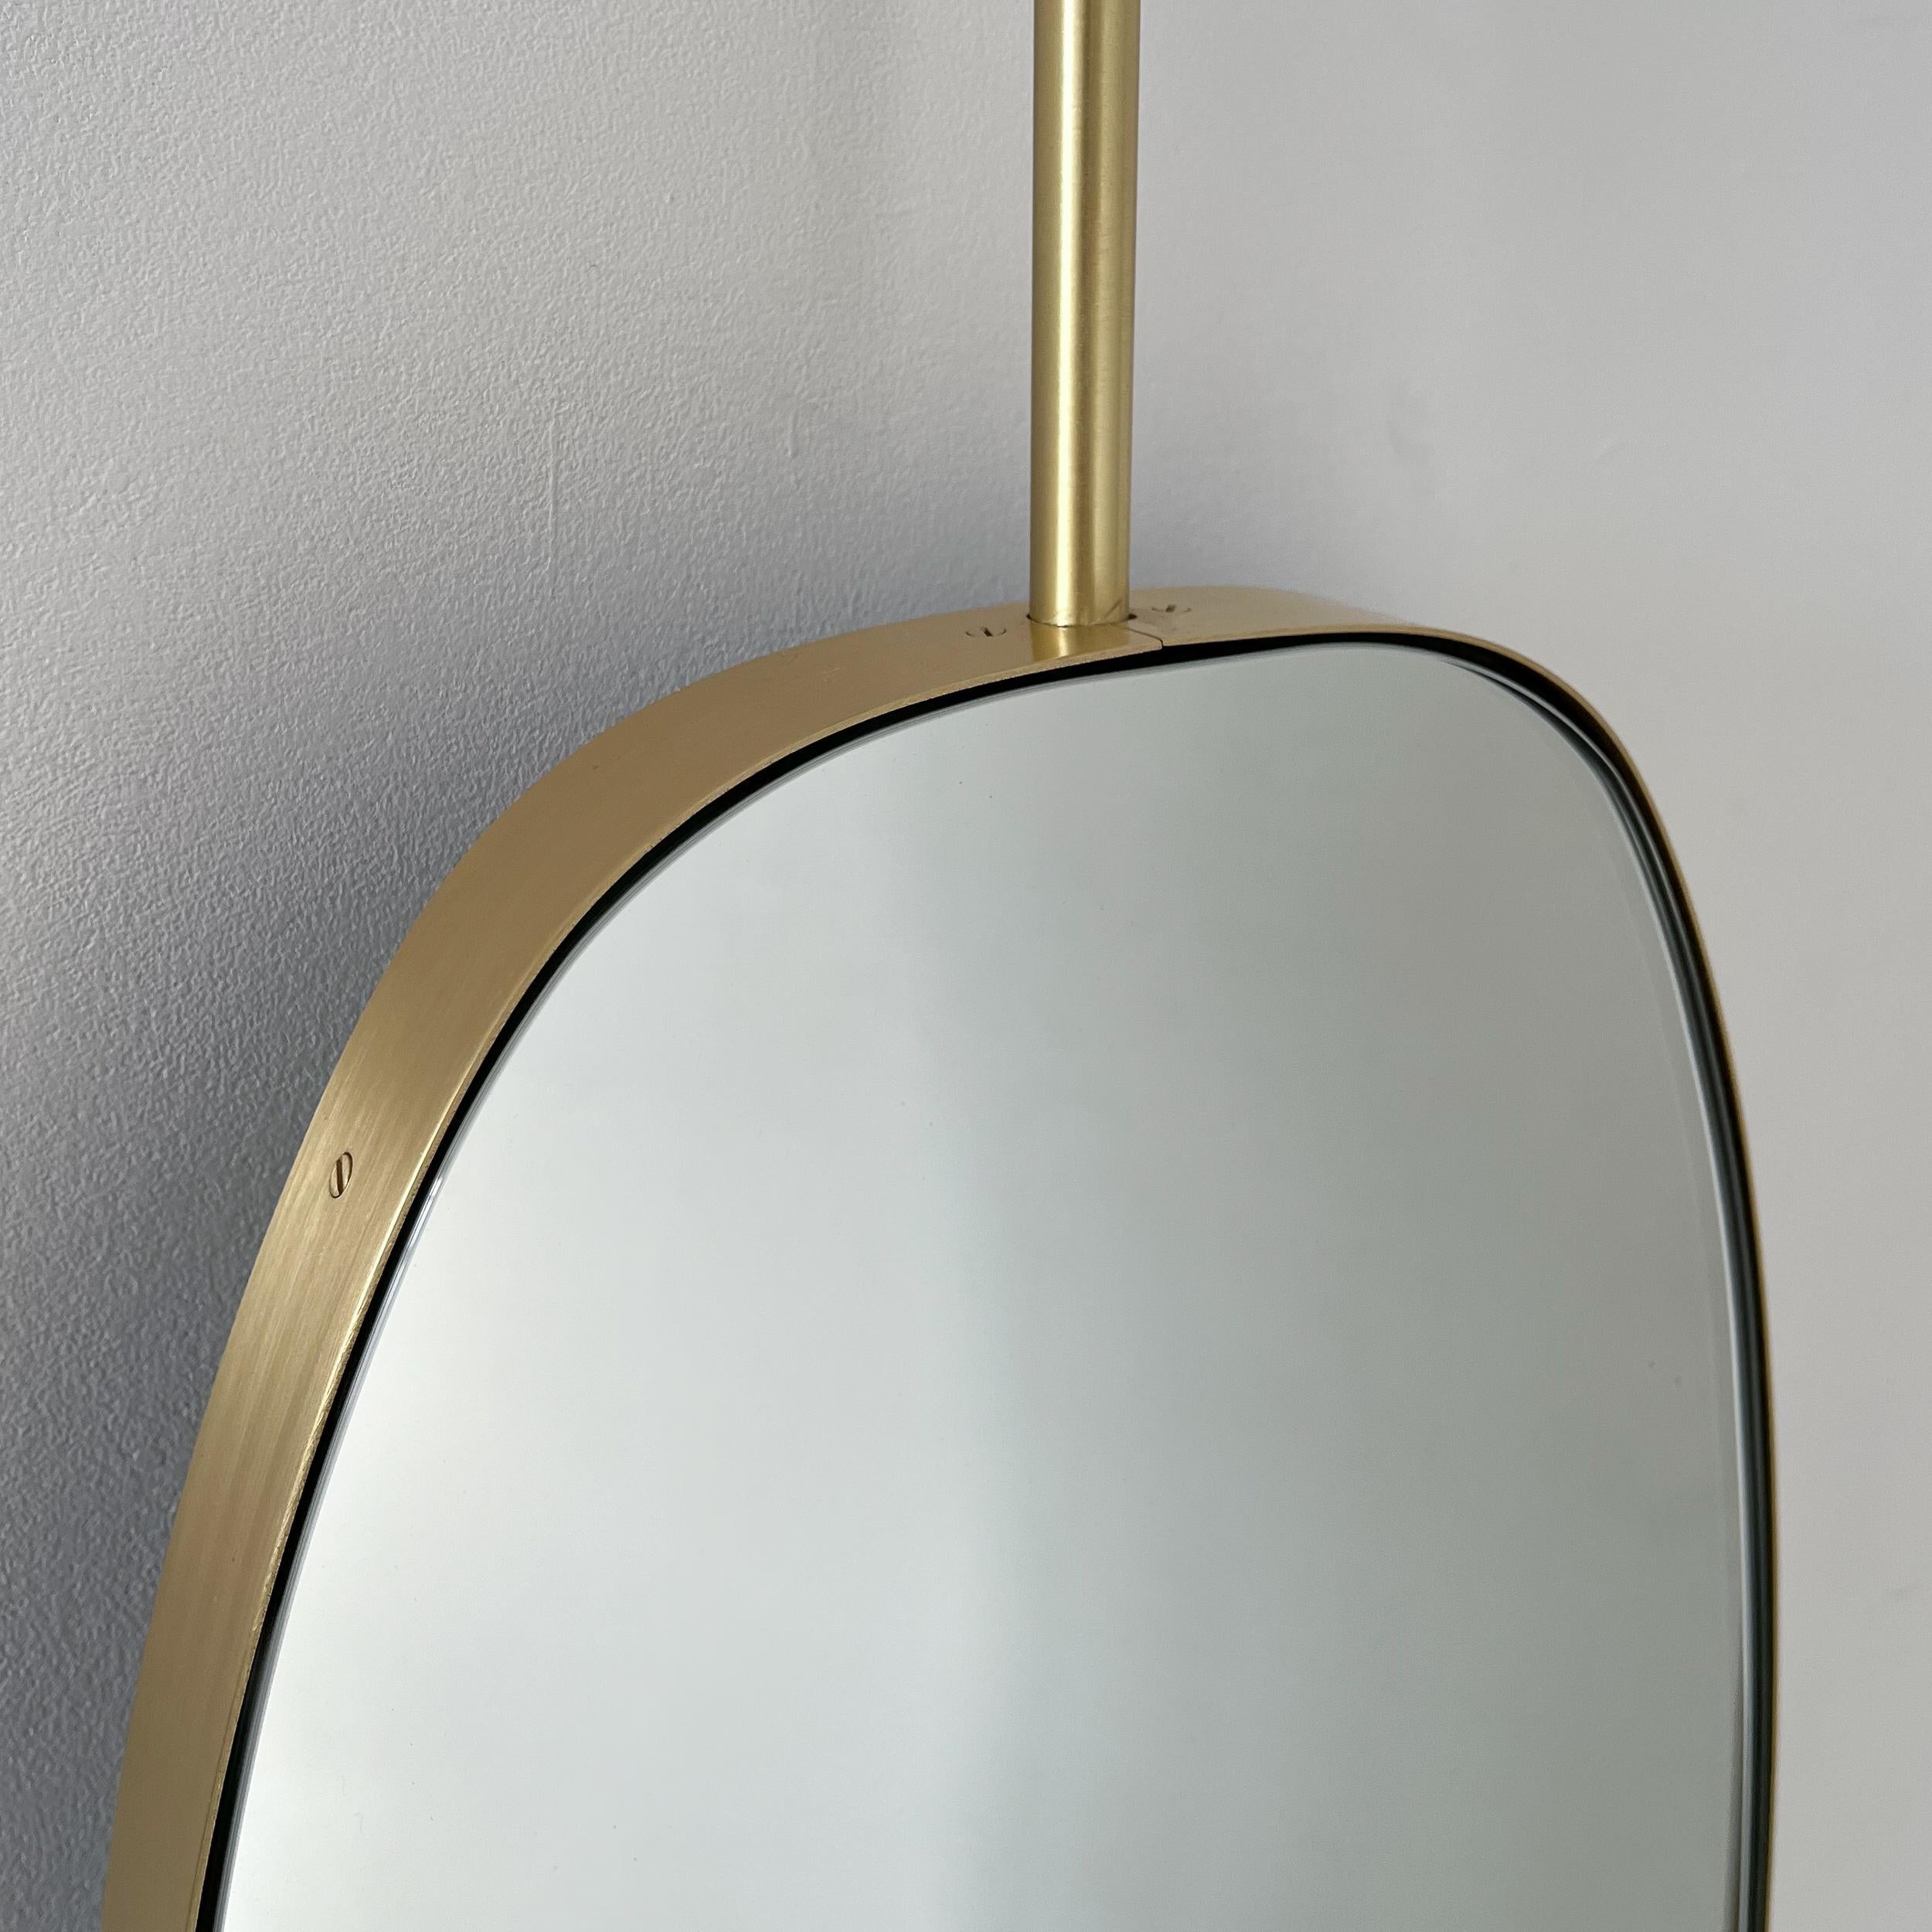 miroir suspendu plafond salle de bain